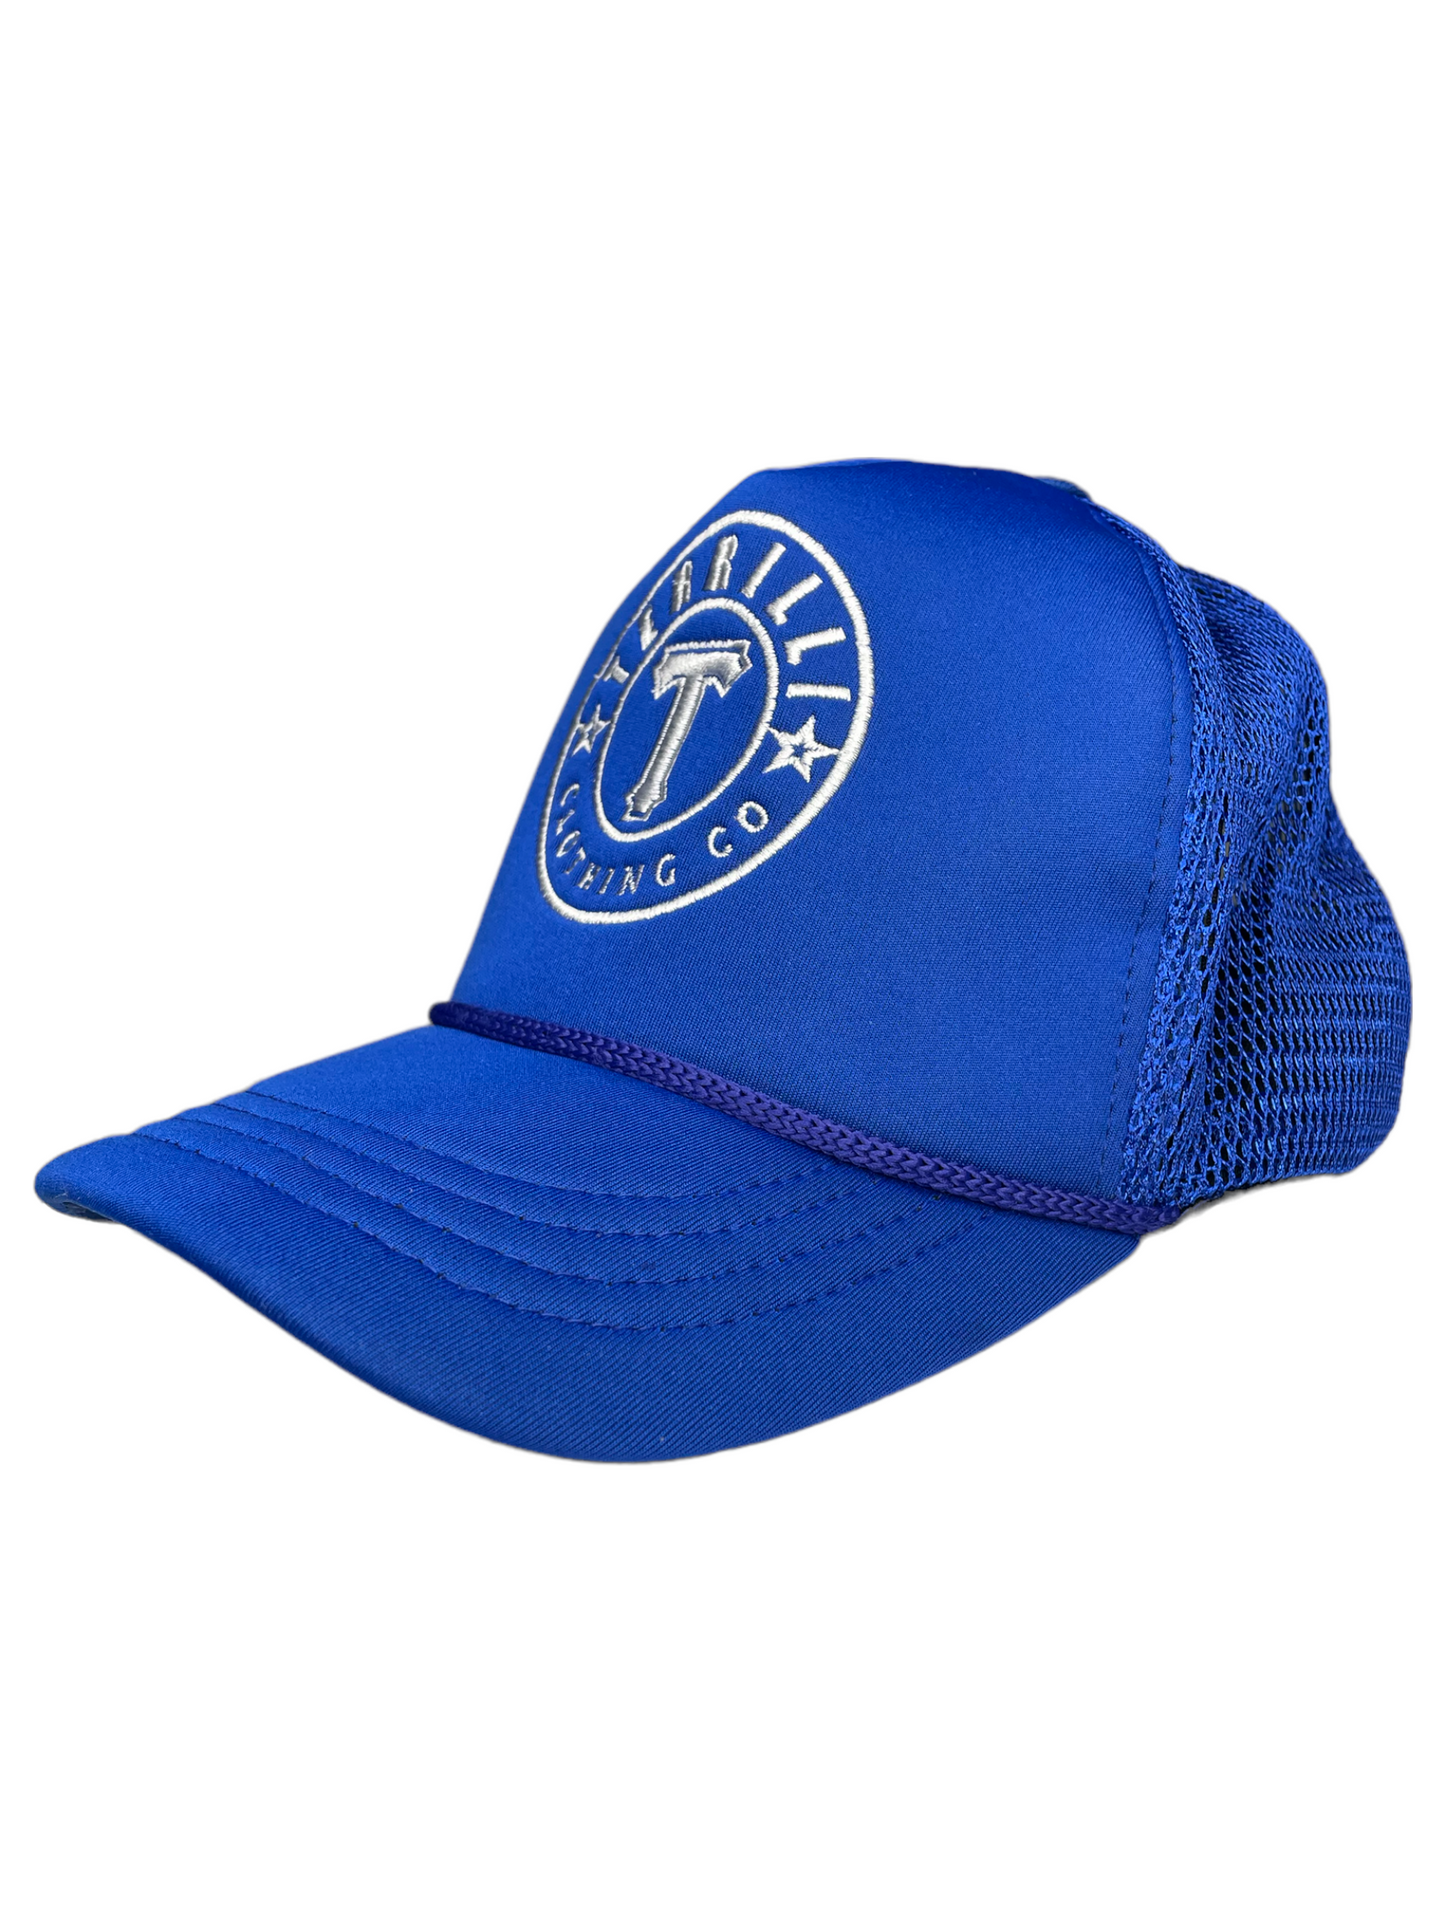 Terrilli Clothing Co. Foam Trucker Hat (Royal)